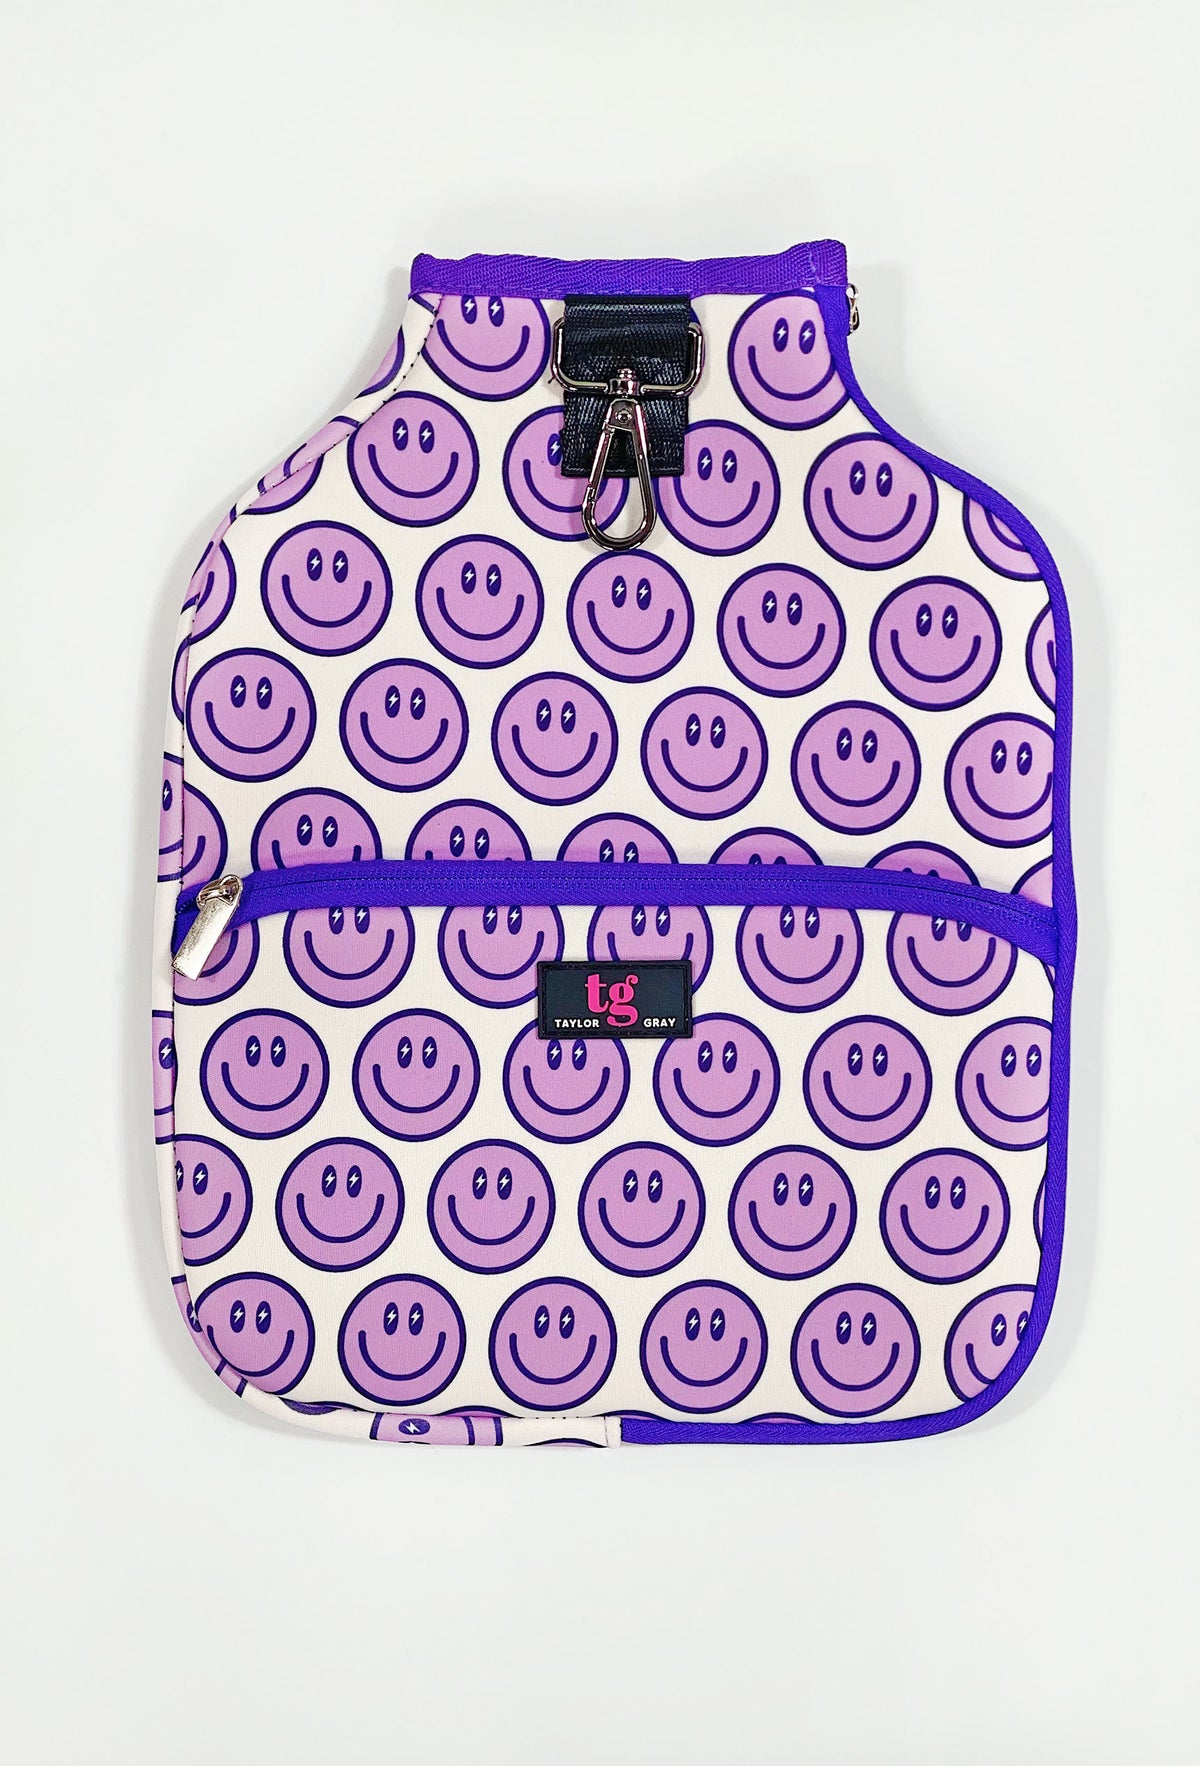 The Happy Purple Neoprene Pickleball Paddle Cover, Groovy's